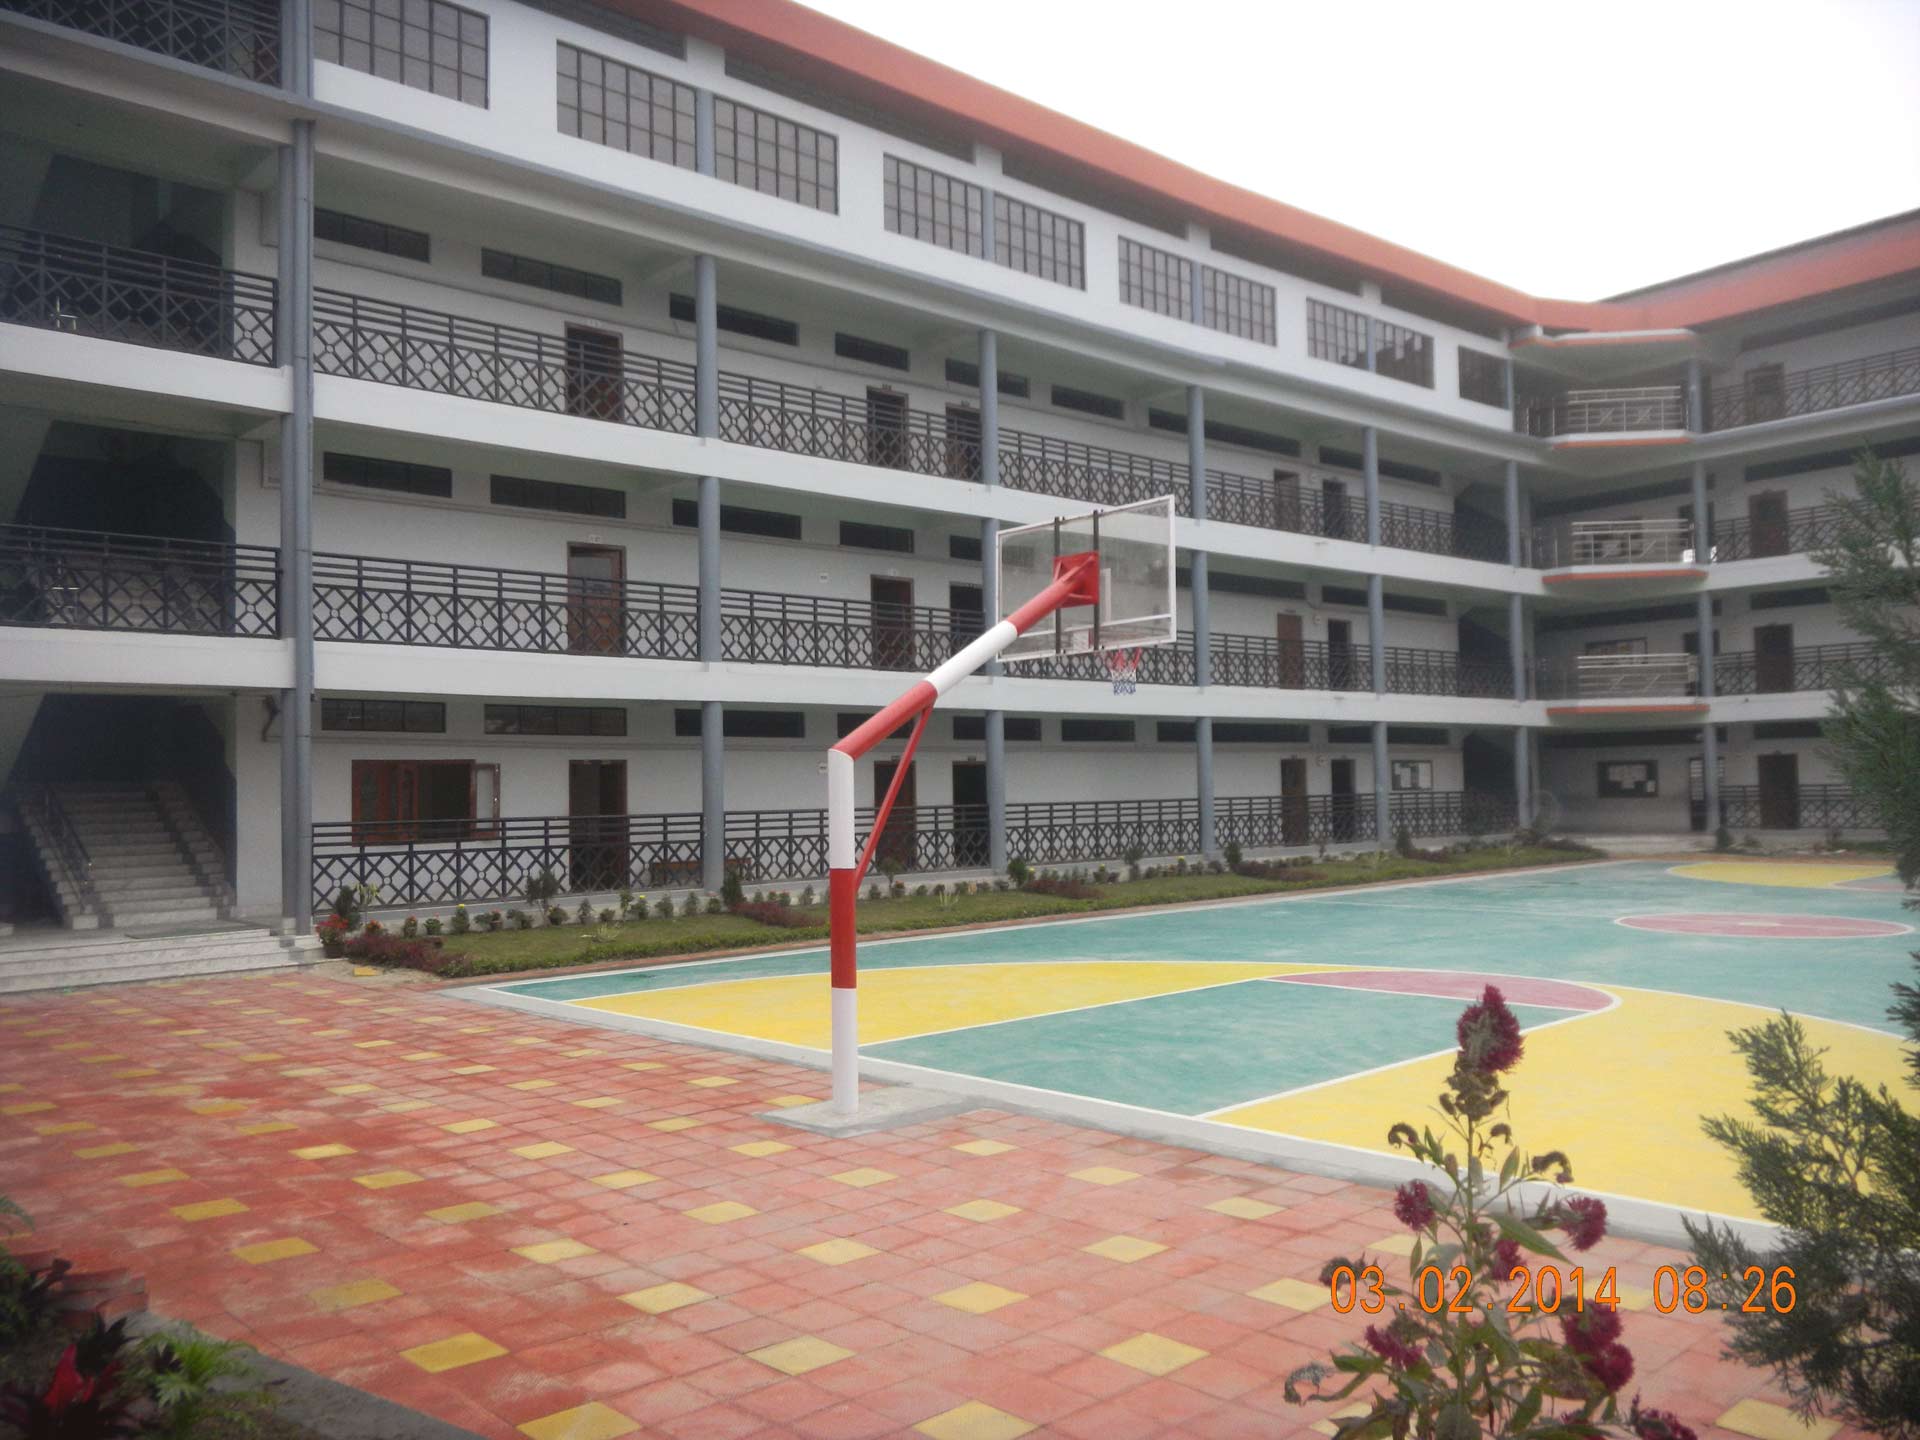 Saint Paul's School, Jalpaiguri